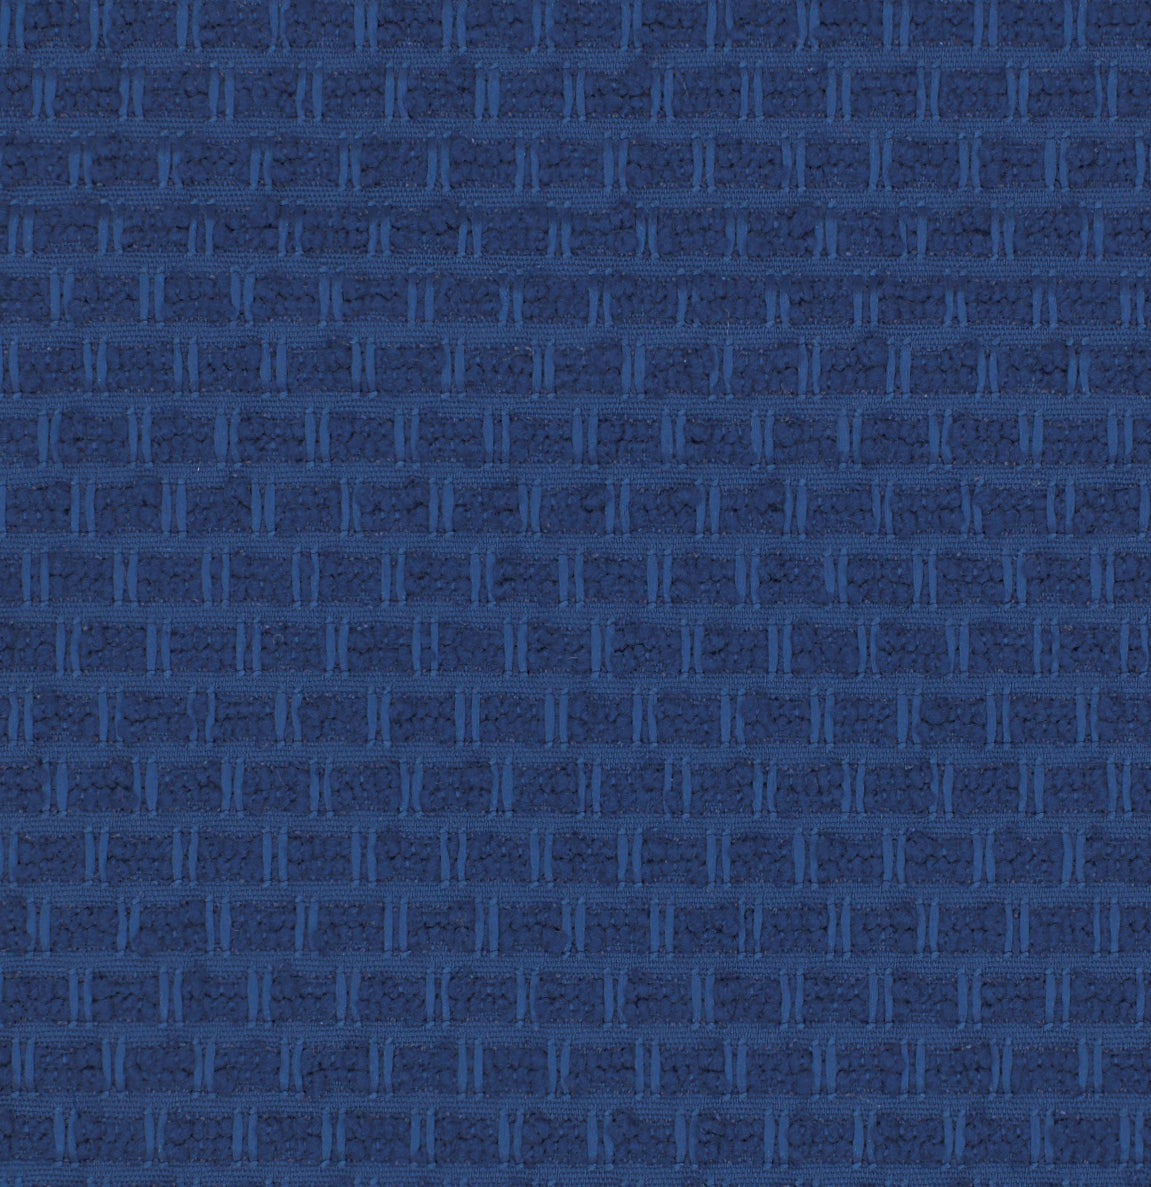 32011-03 Imperial Blue Woven Jacquard Plain Dyed Blend blend blue jacquard plain dyed woven Jacquard, Solid Color - knit fabric - woven fabric - fabric company - fabric wholesale - fabric b2b - fabric factory - high quality fabric - hong kong fabric - fabric hk - acetate fabric - cotton fabric - linen fabric - metallic fabric - nylon fabric - polyester fabric - spandex fabric - chun wing hing - cwh hk - fabric worldwide ship - 針織布 - 梳織布 - 布料公司- 布料批發 - 香港布料 - 秦榮興